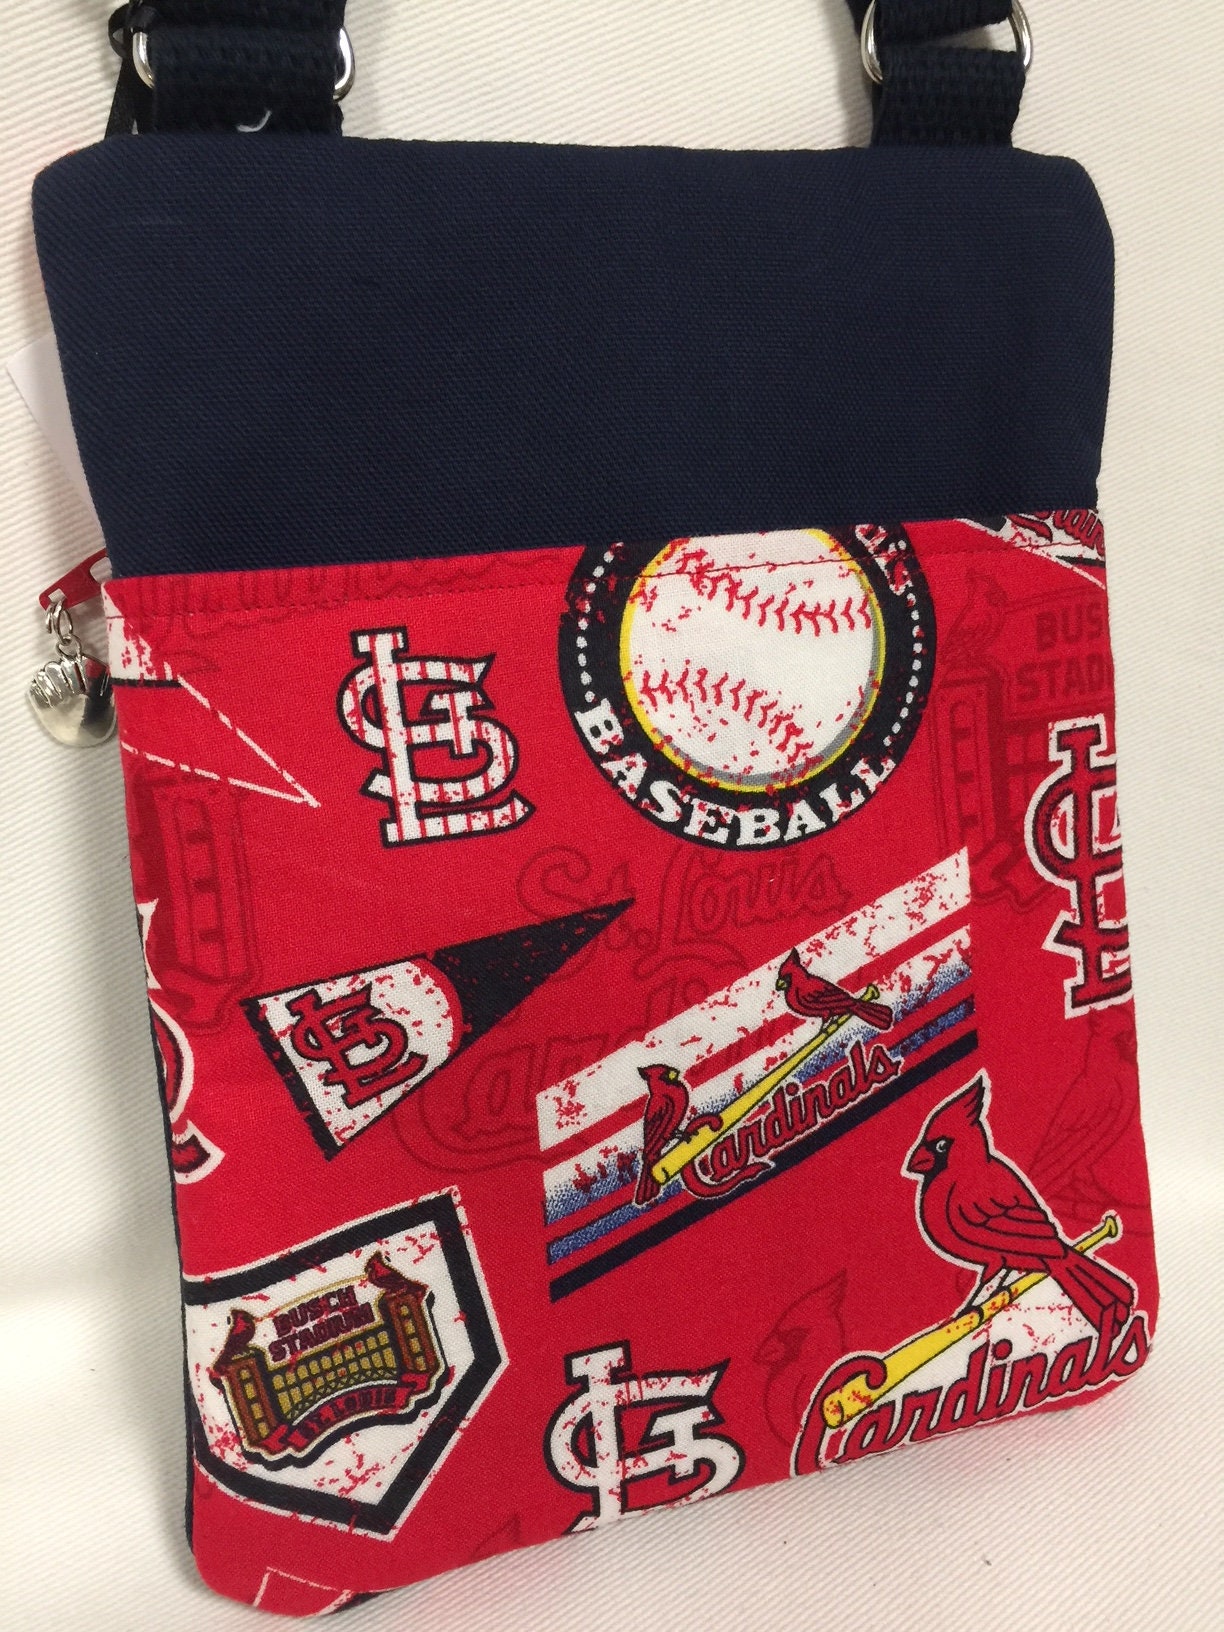 Official St. Louis Cardinals Purses, Cardinals Handbags, Clutches